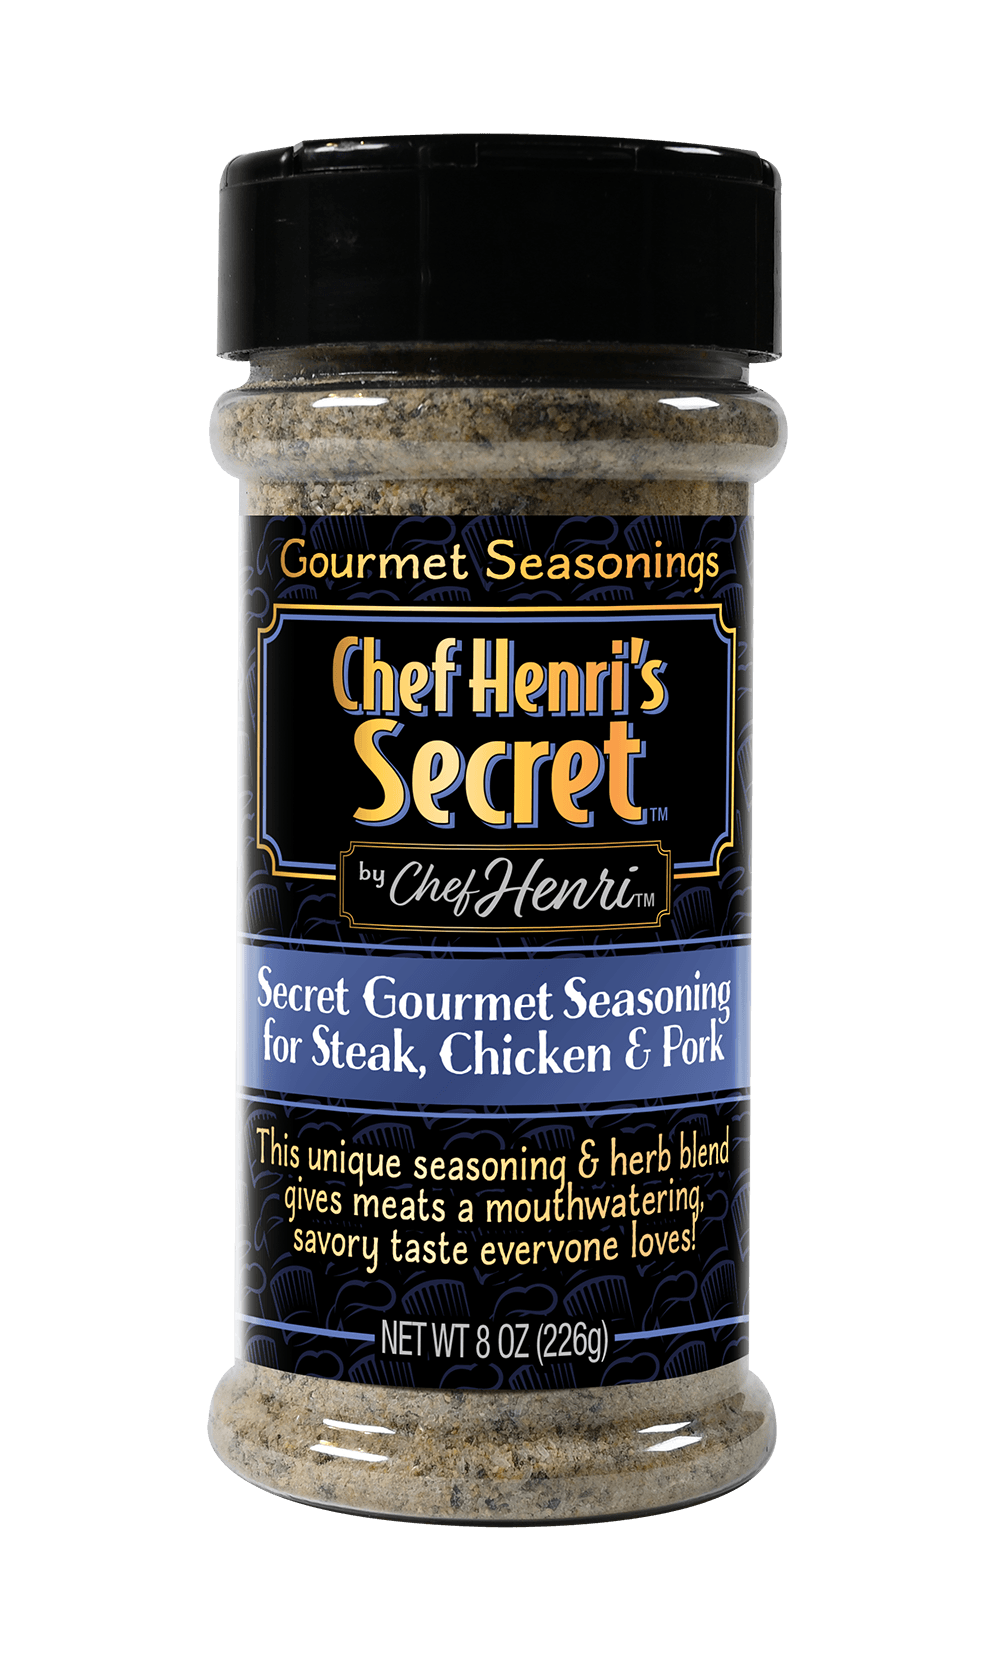 Gourmet Seasonings Box Set - CheeseButta - Gourmet Products